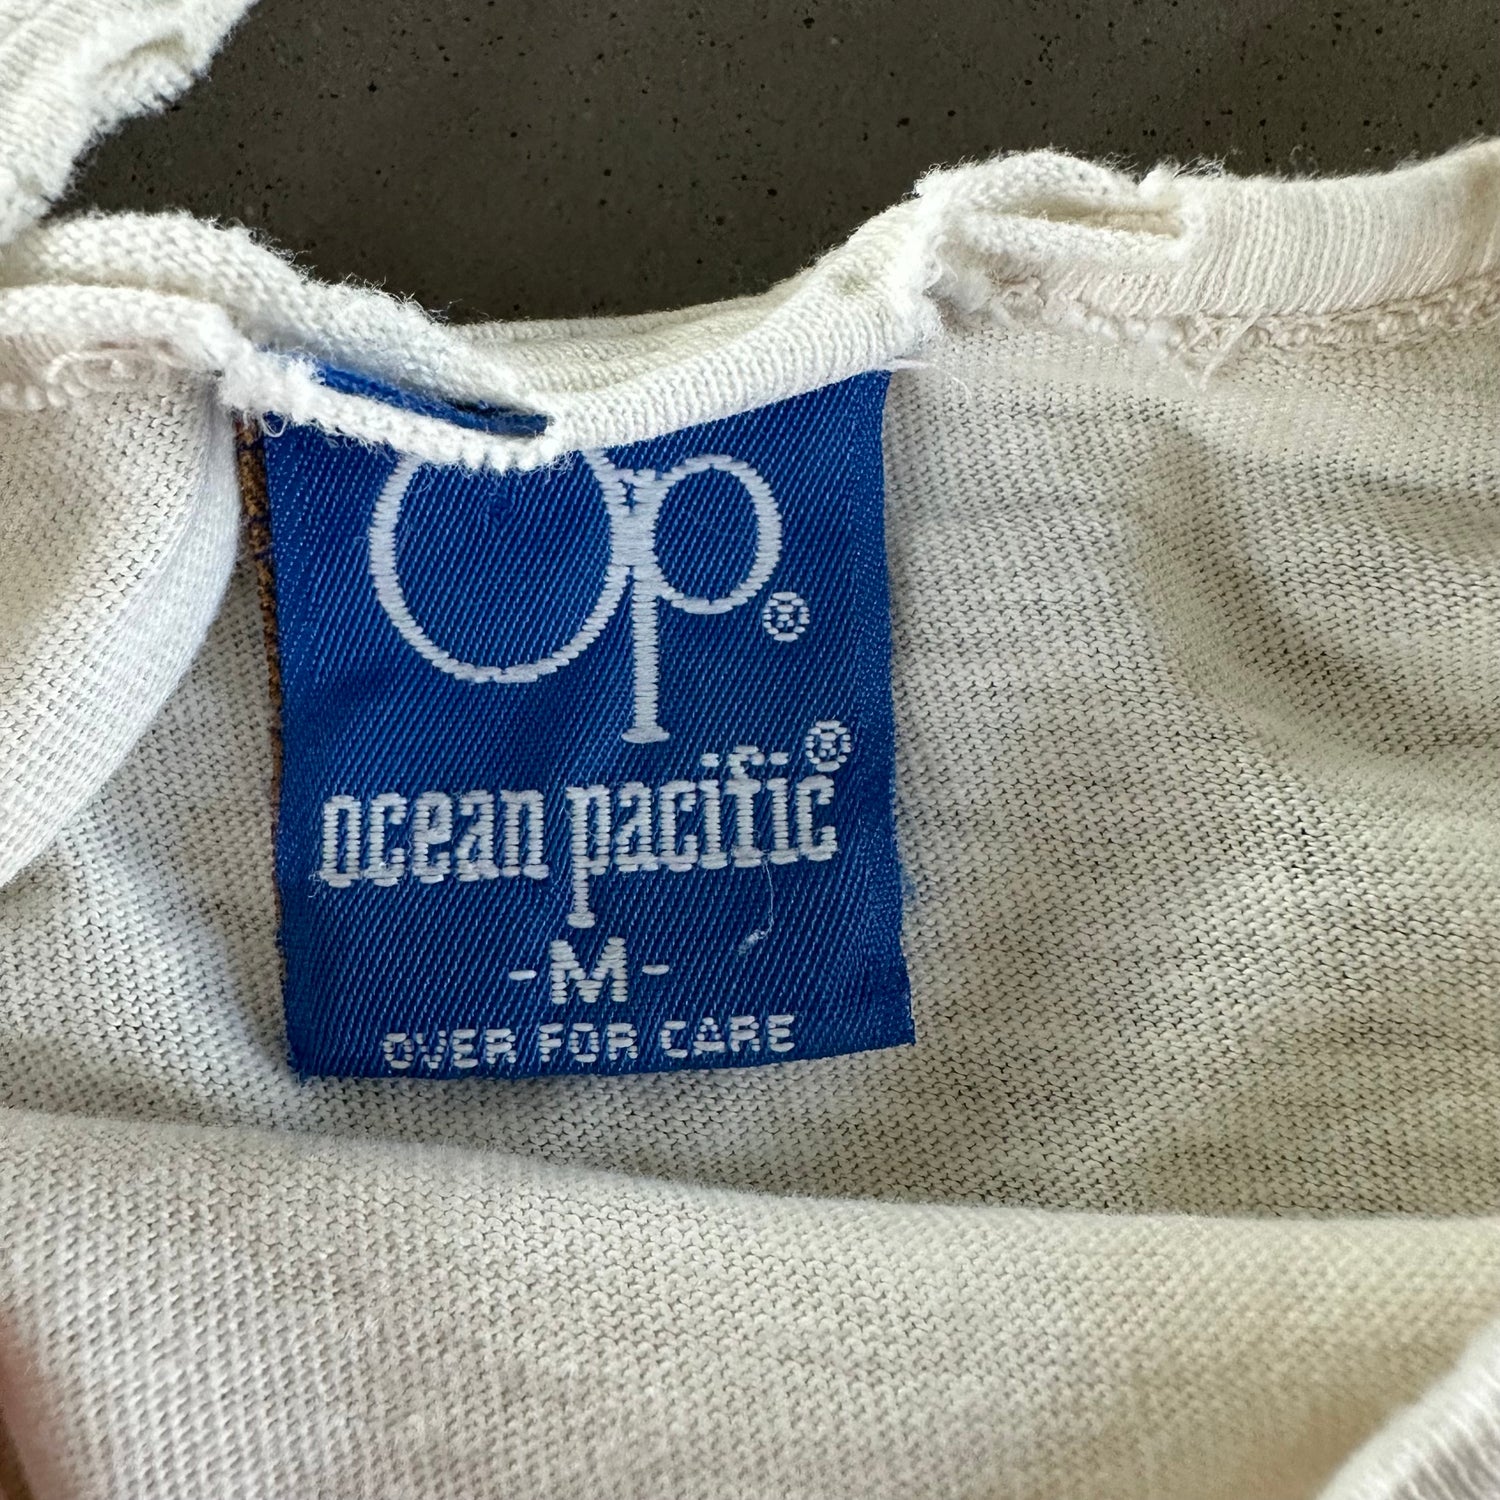 Vintage 1983 Ocean Pacific T-shirt size Medium